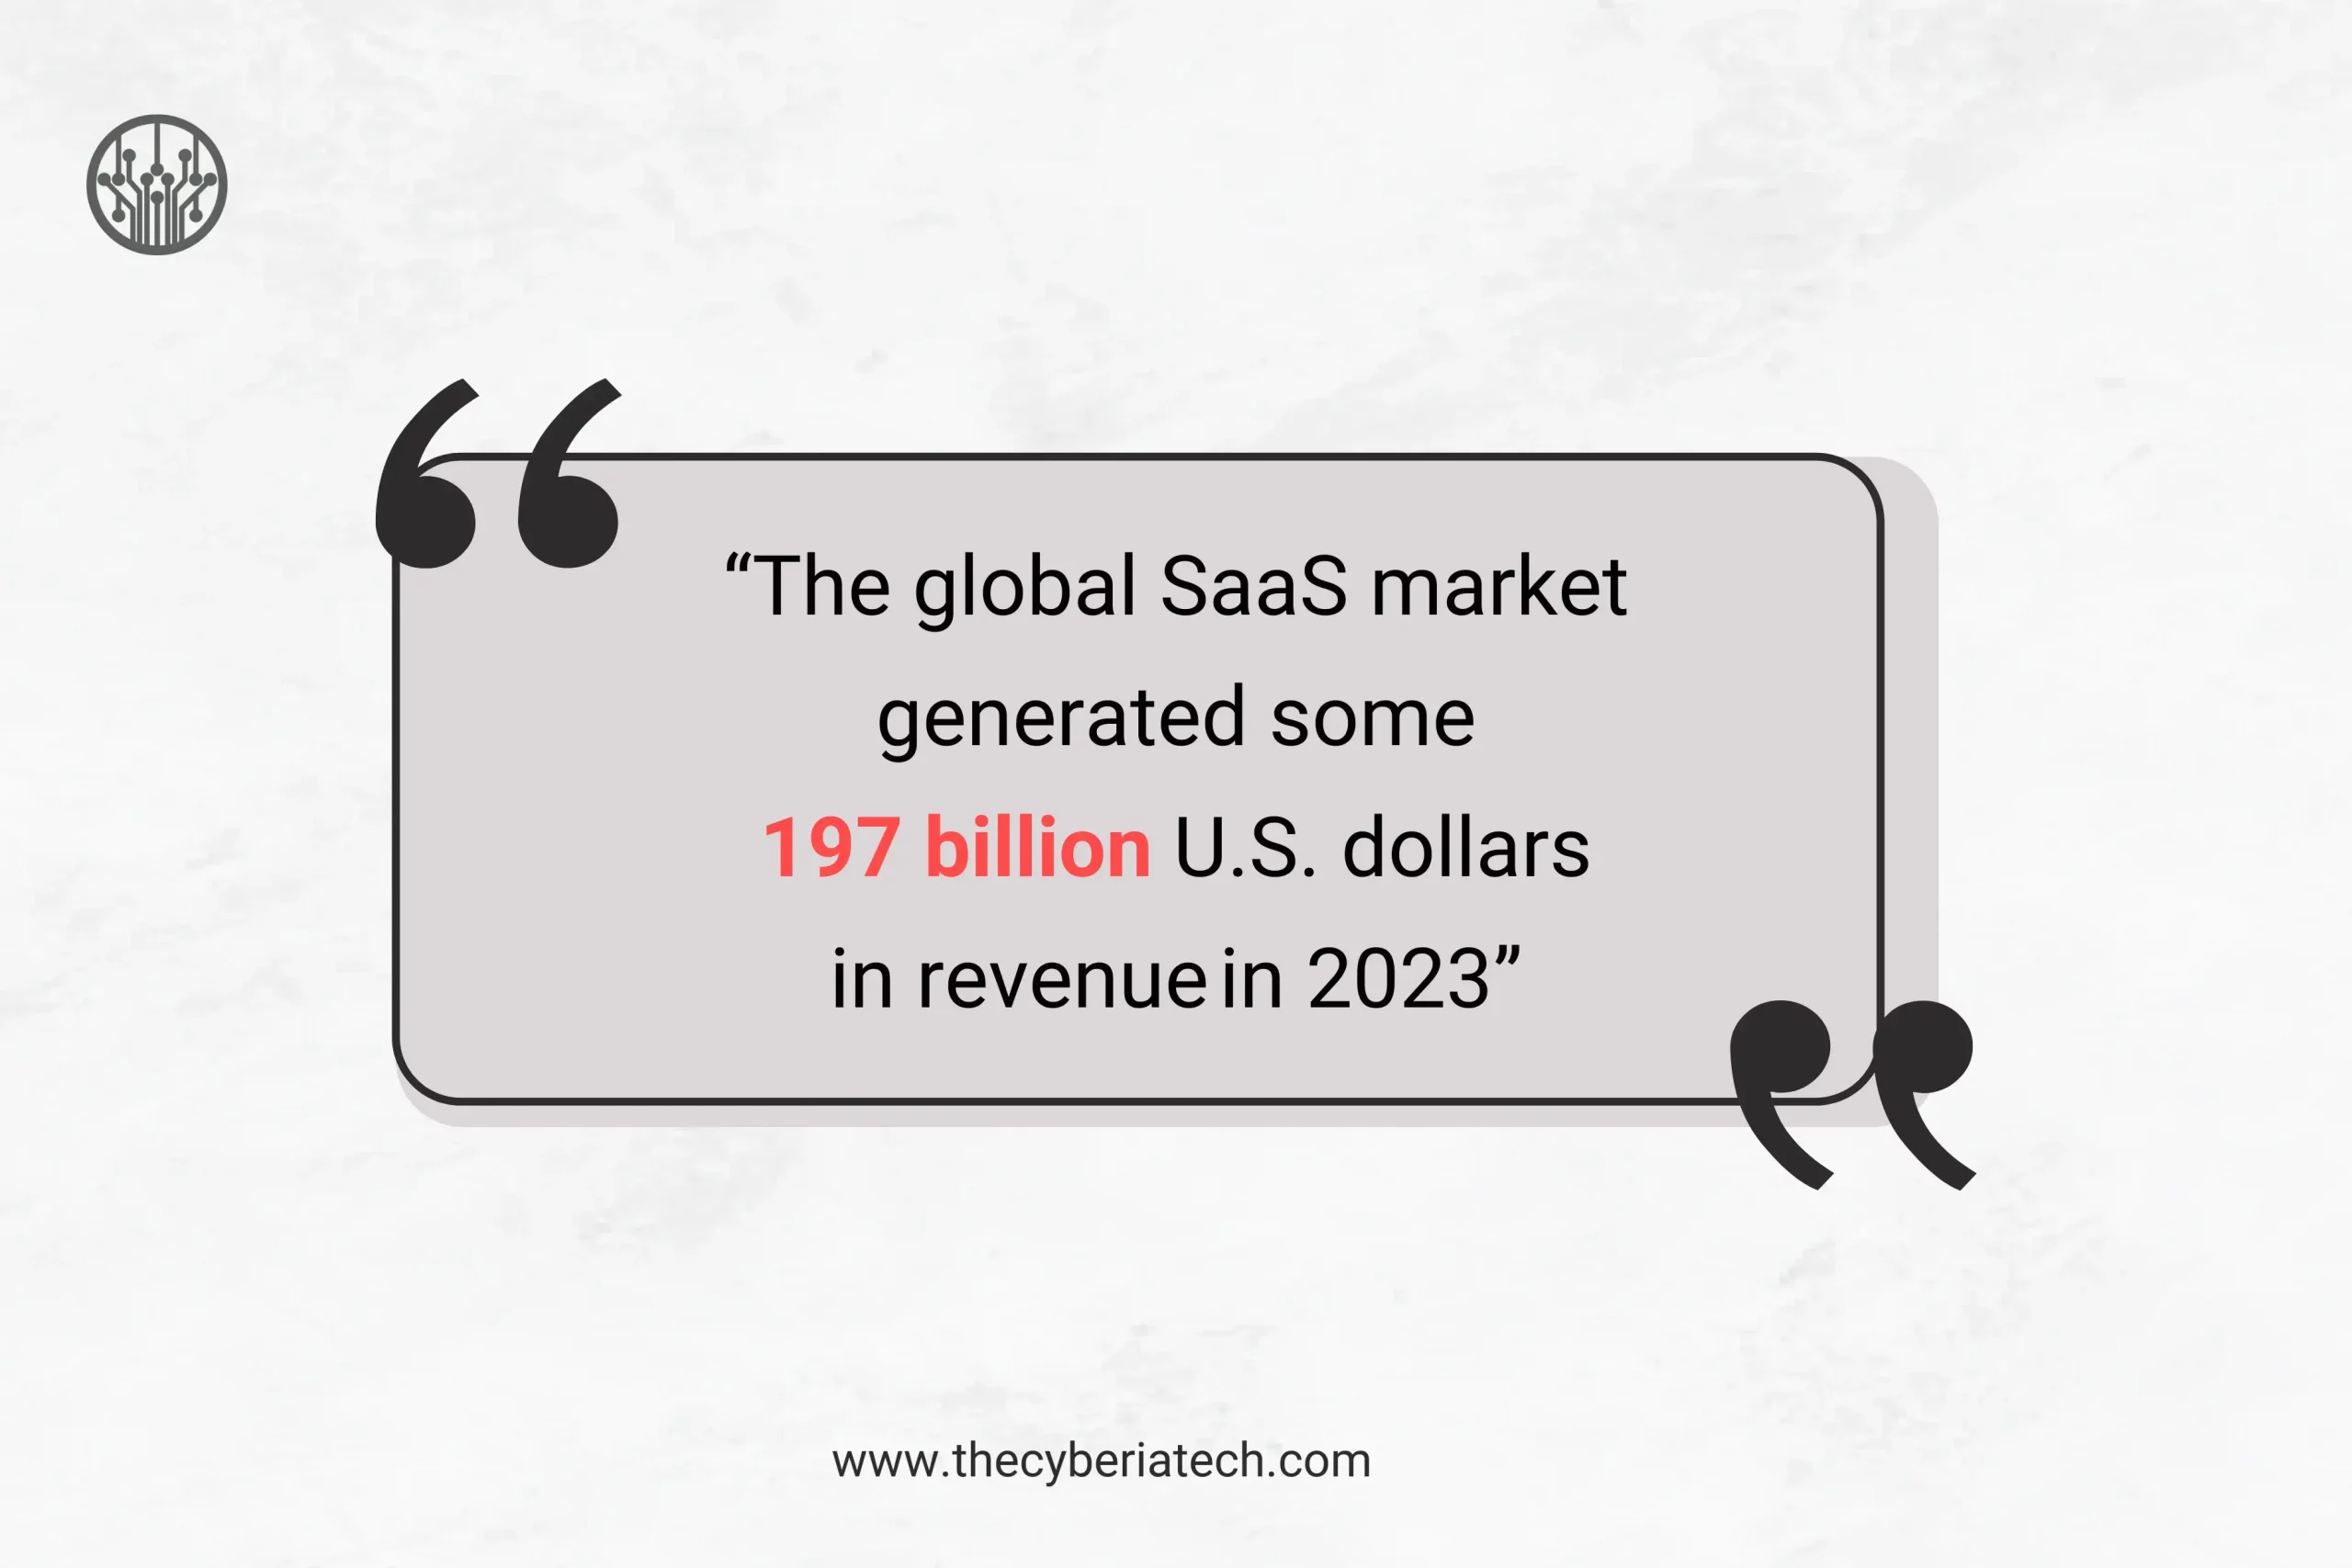 The global SaaS market generated around $197 billion in 2023